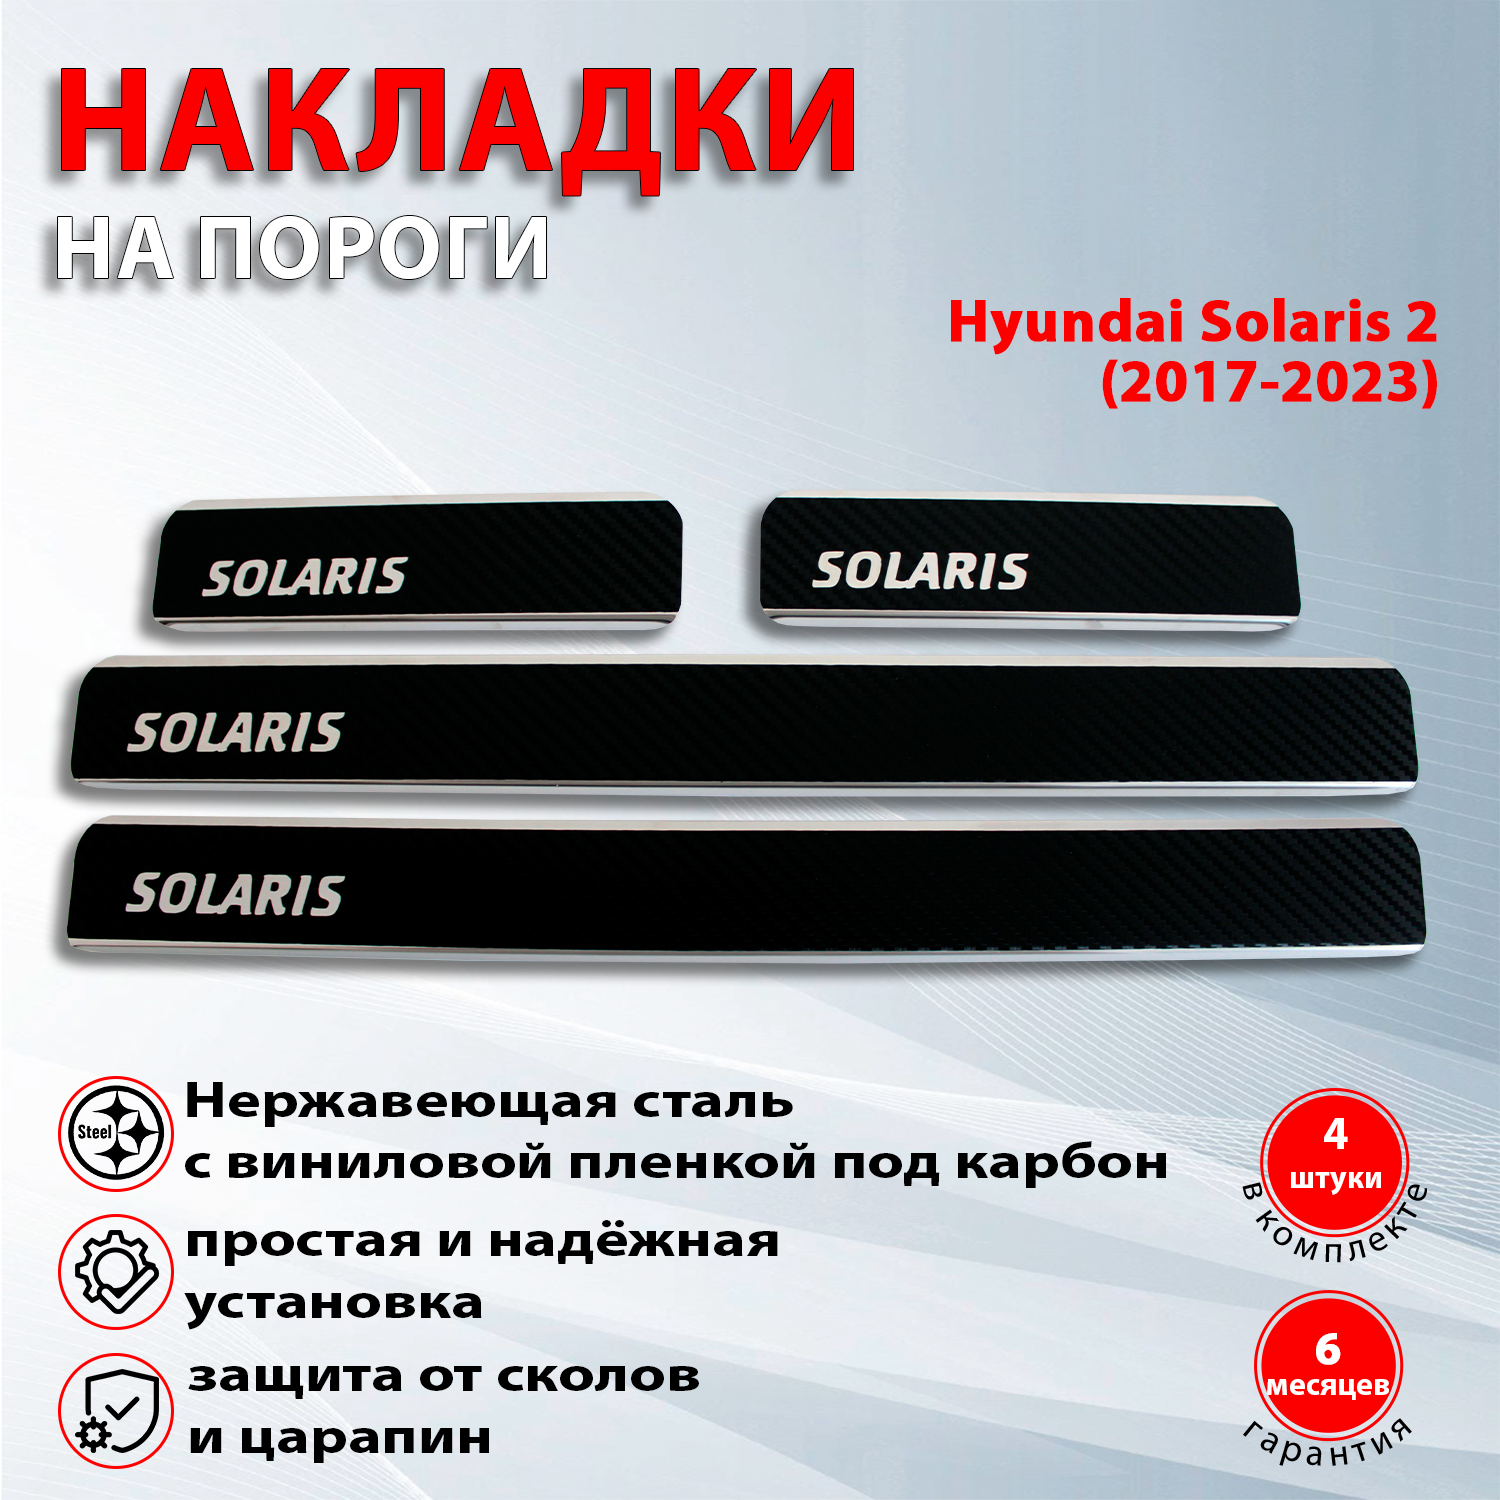 Накладки на пороги Хендай Солярис 2 / Hyundai Solaris 2 карбон / нержавейка (2017-2023) надпись Solaris